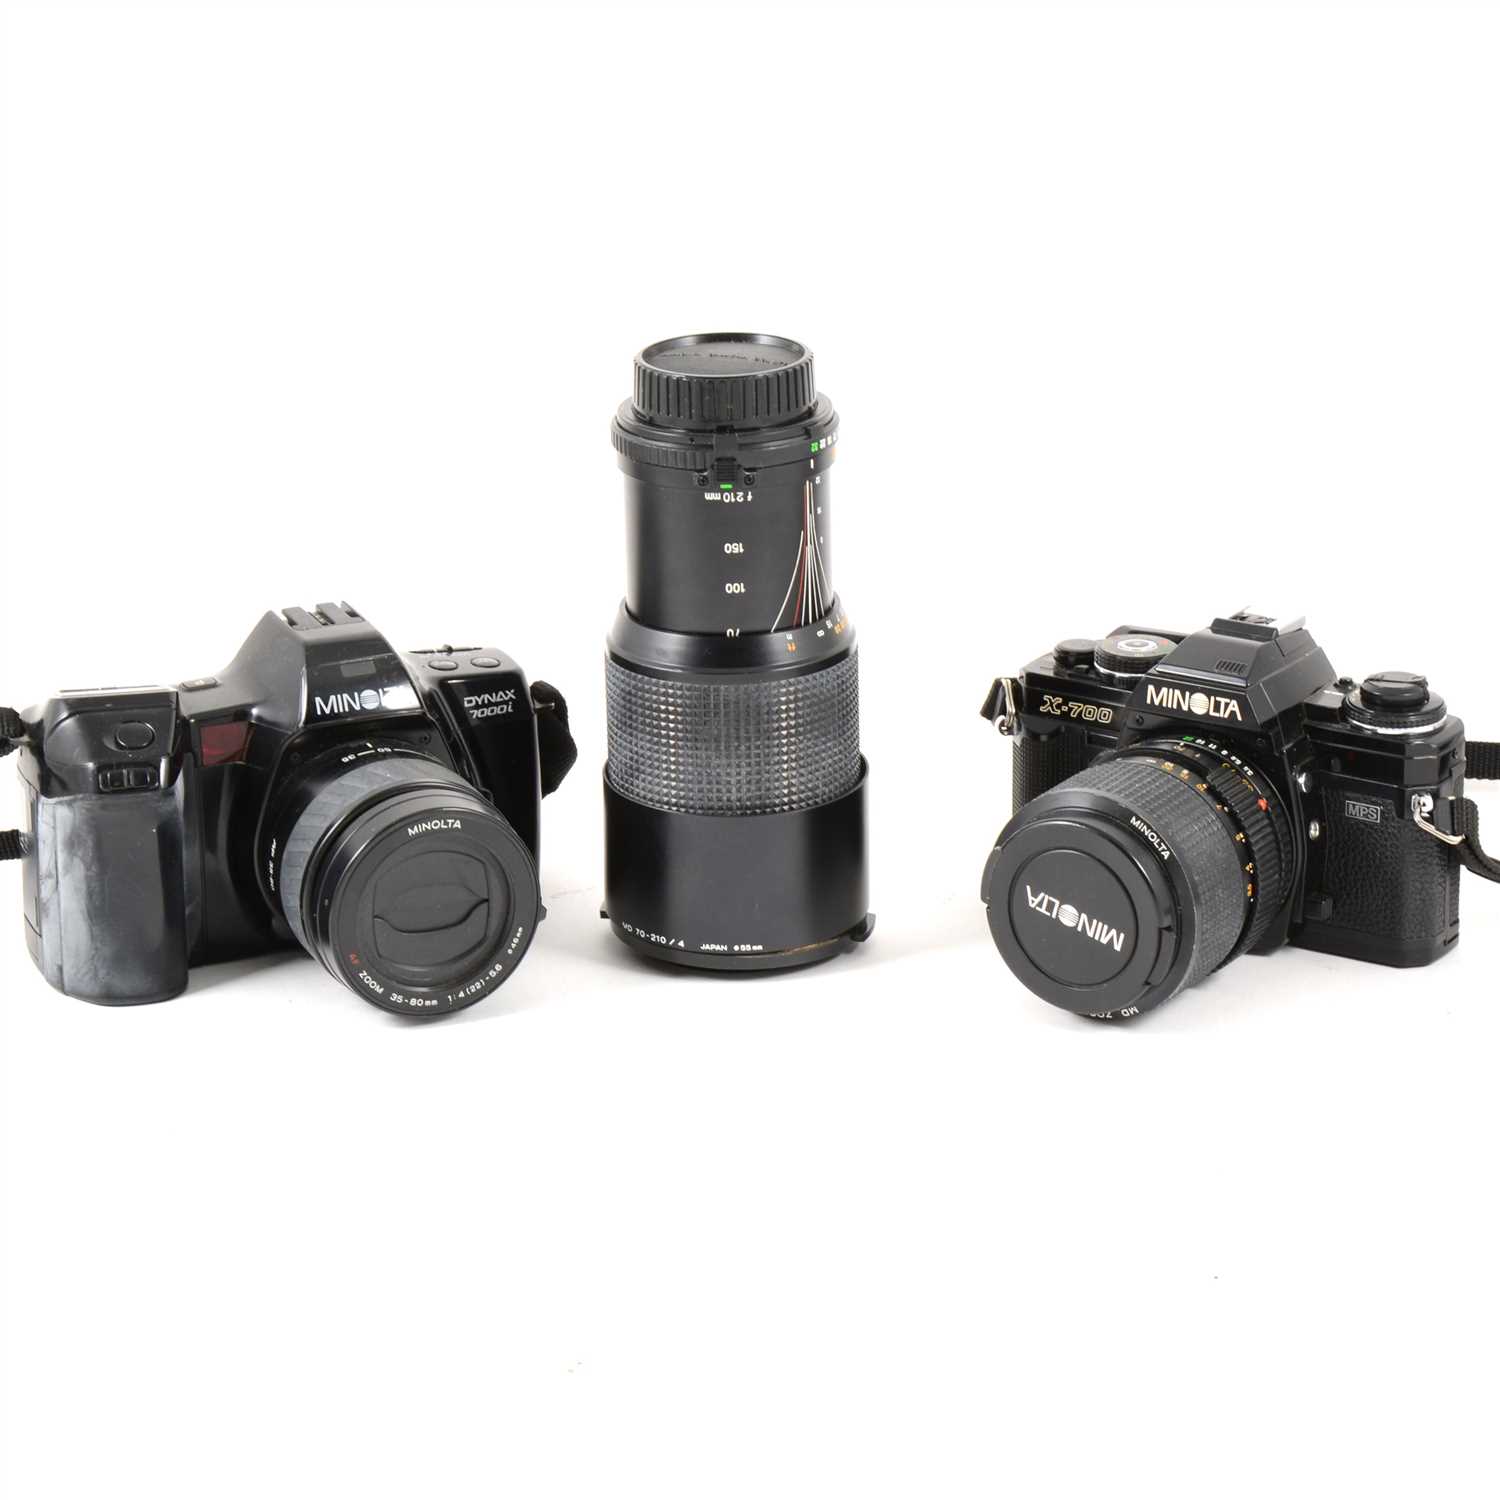 Lot 96 - Minolta Dynax 70001 SLR camera, other cameras and lenses.